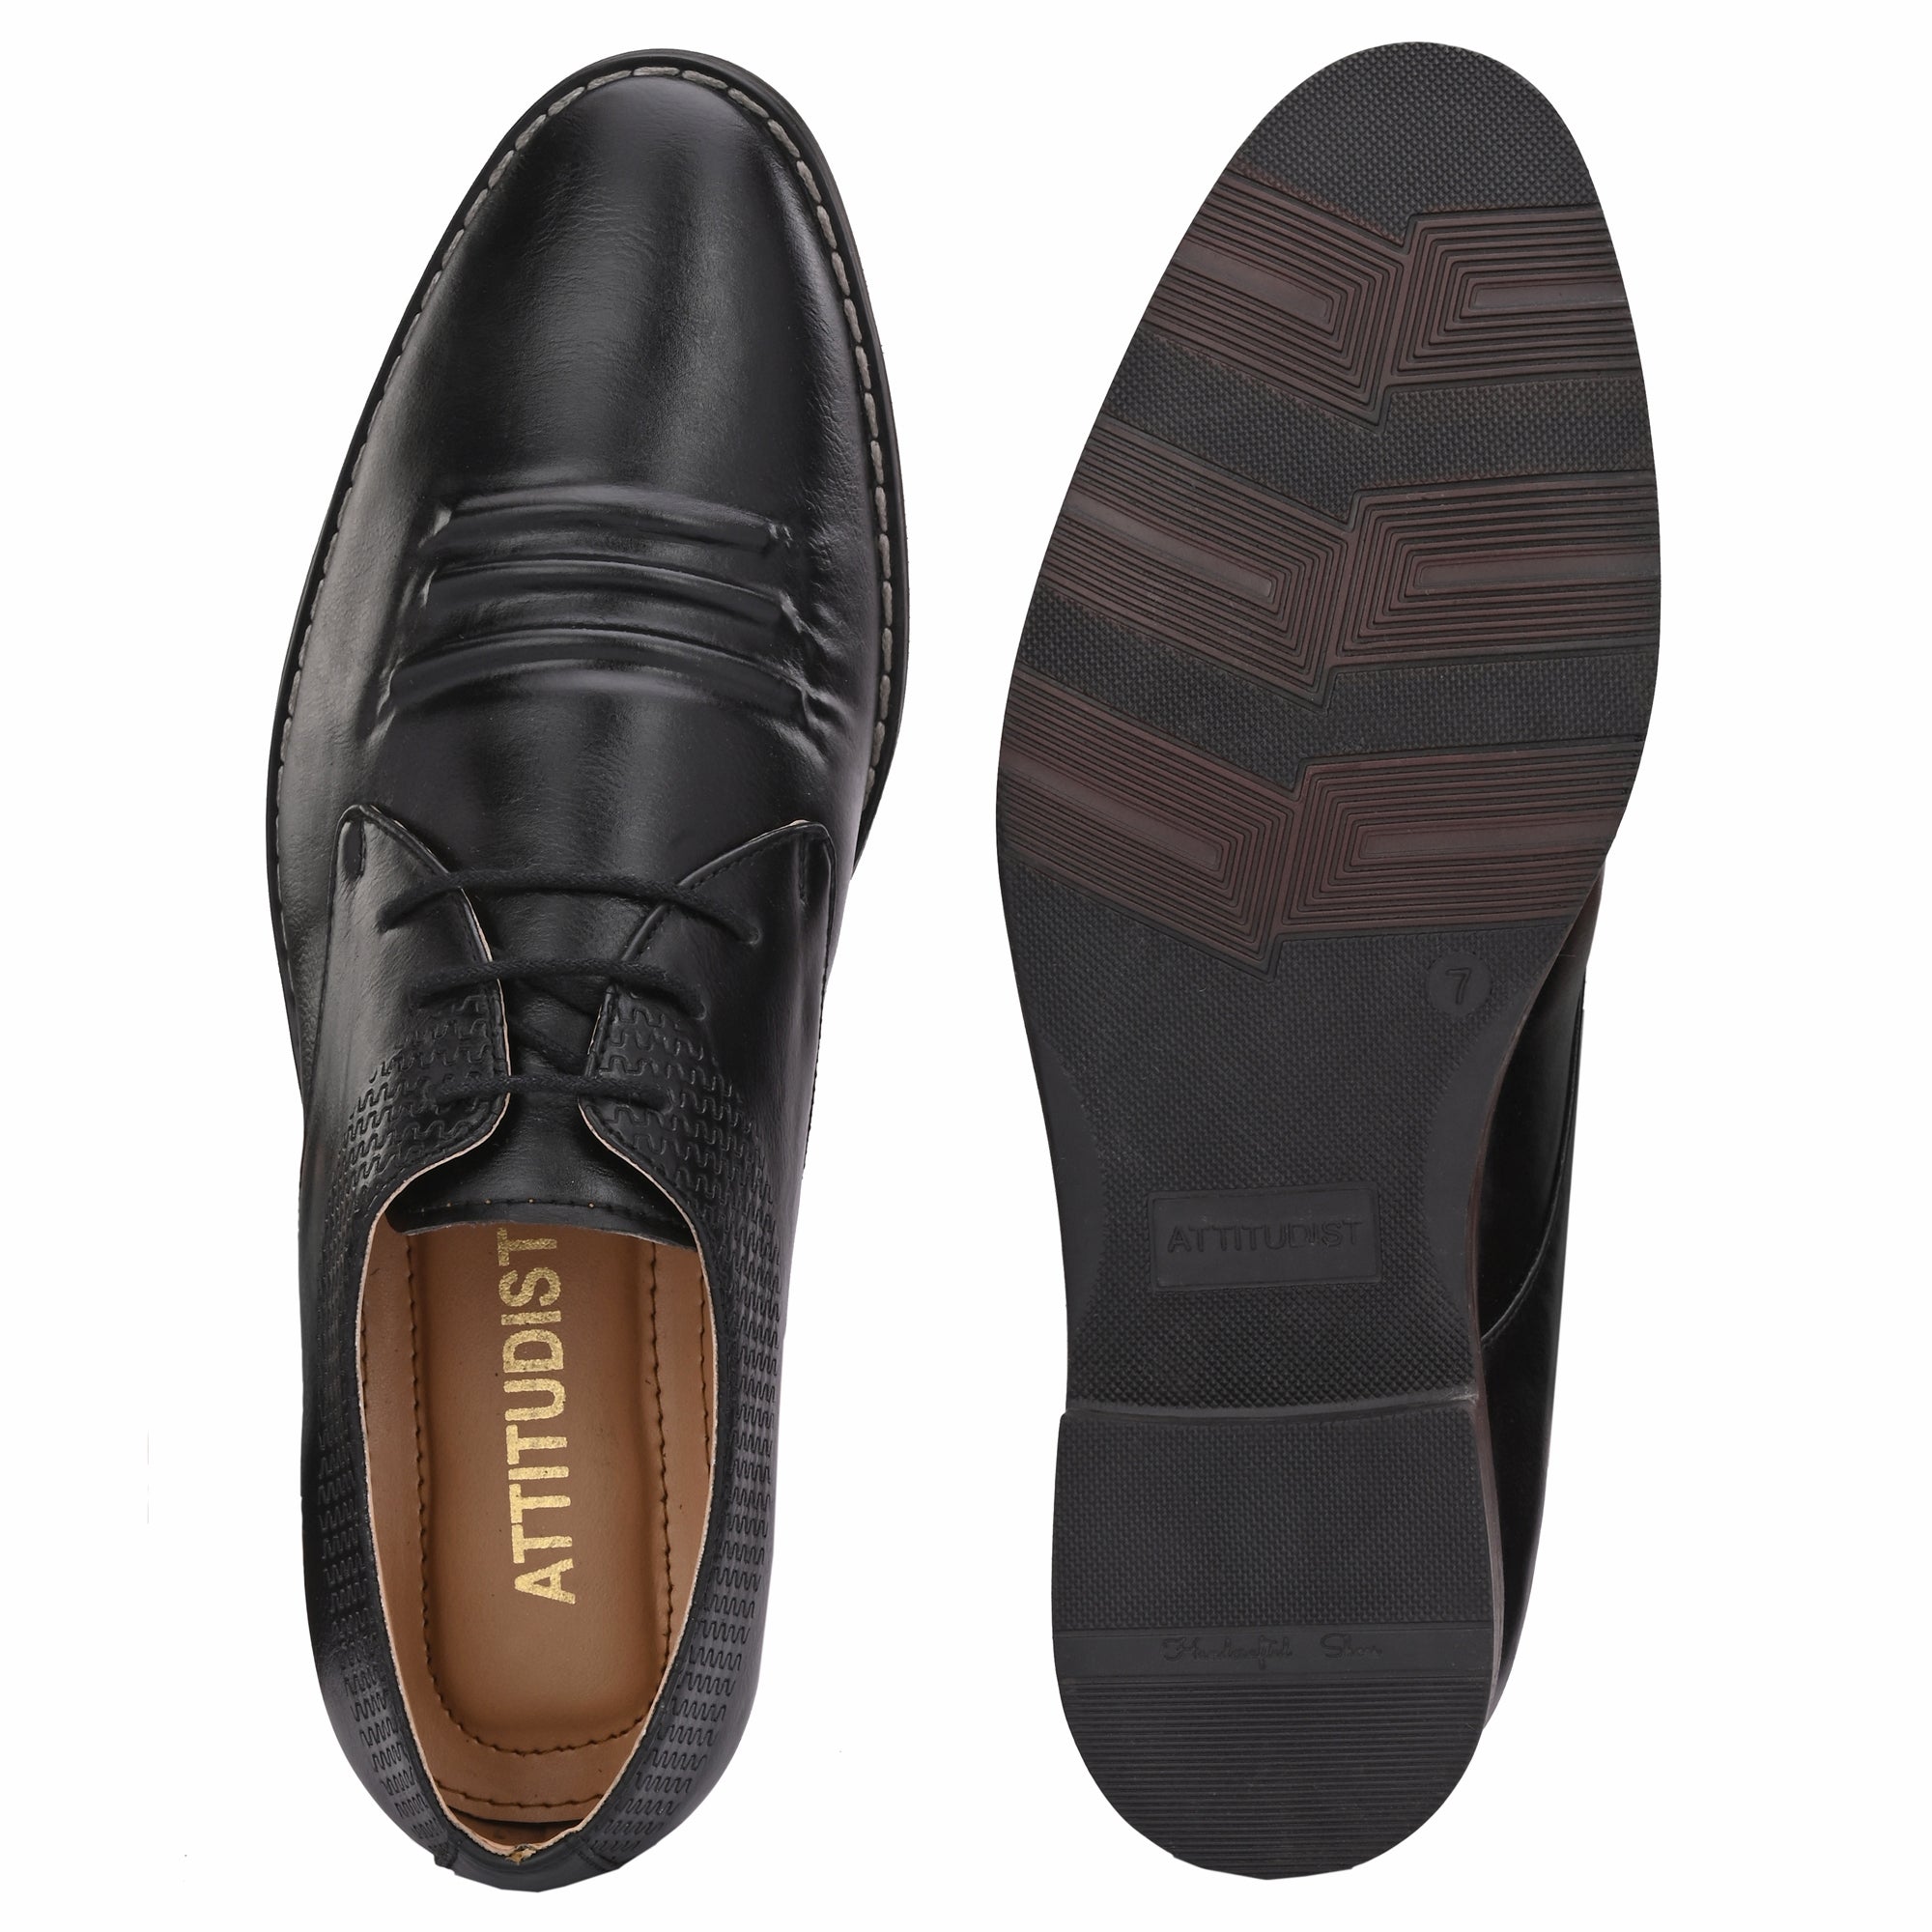 formal-lace-up-attitudist-shoes-for-men-with-design-3703black